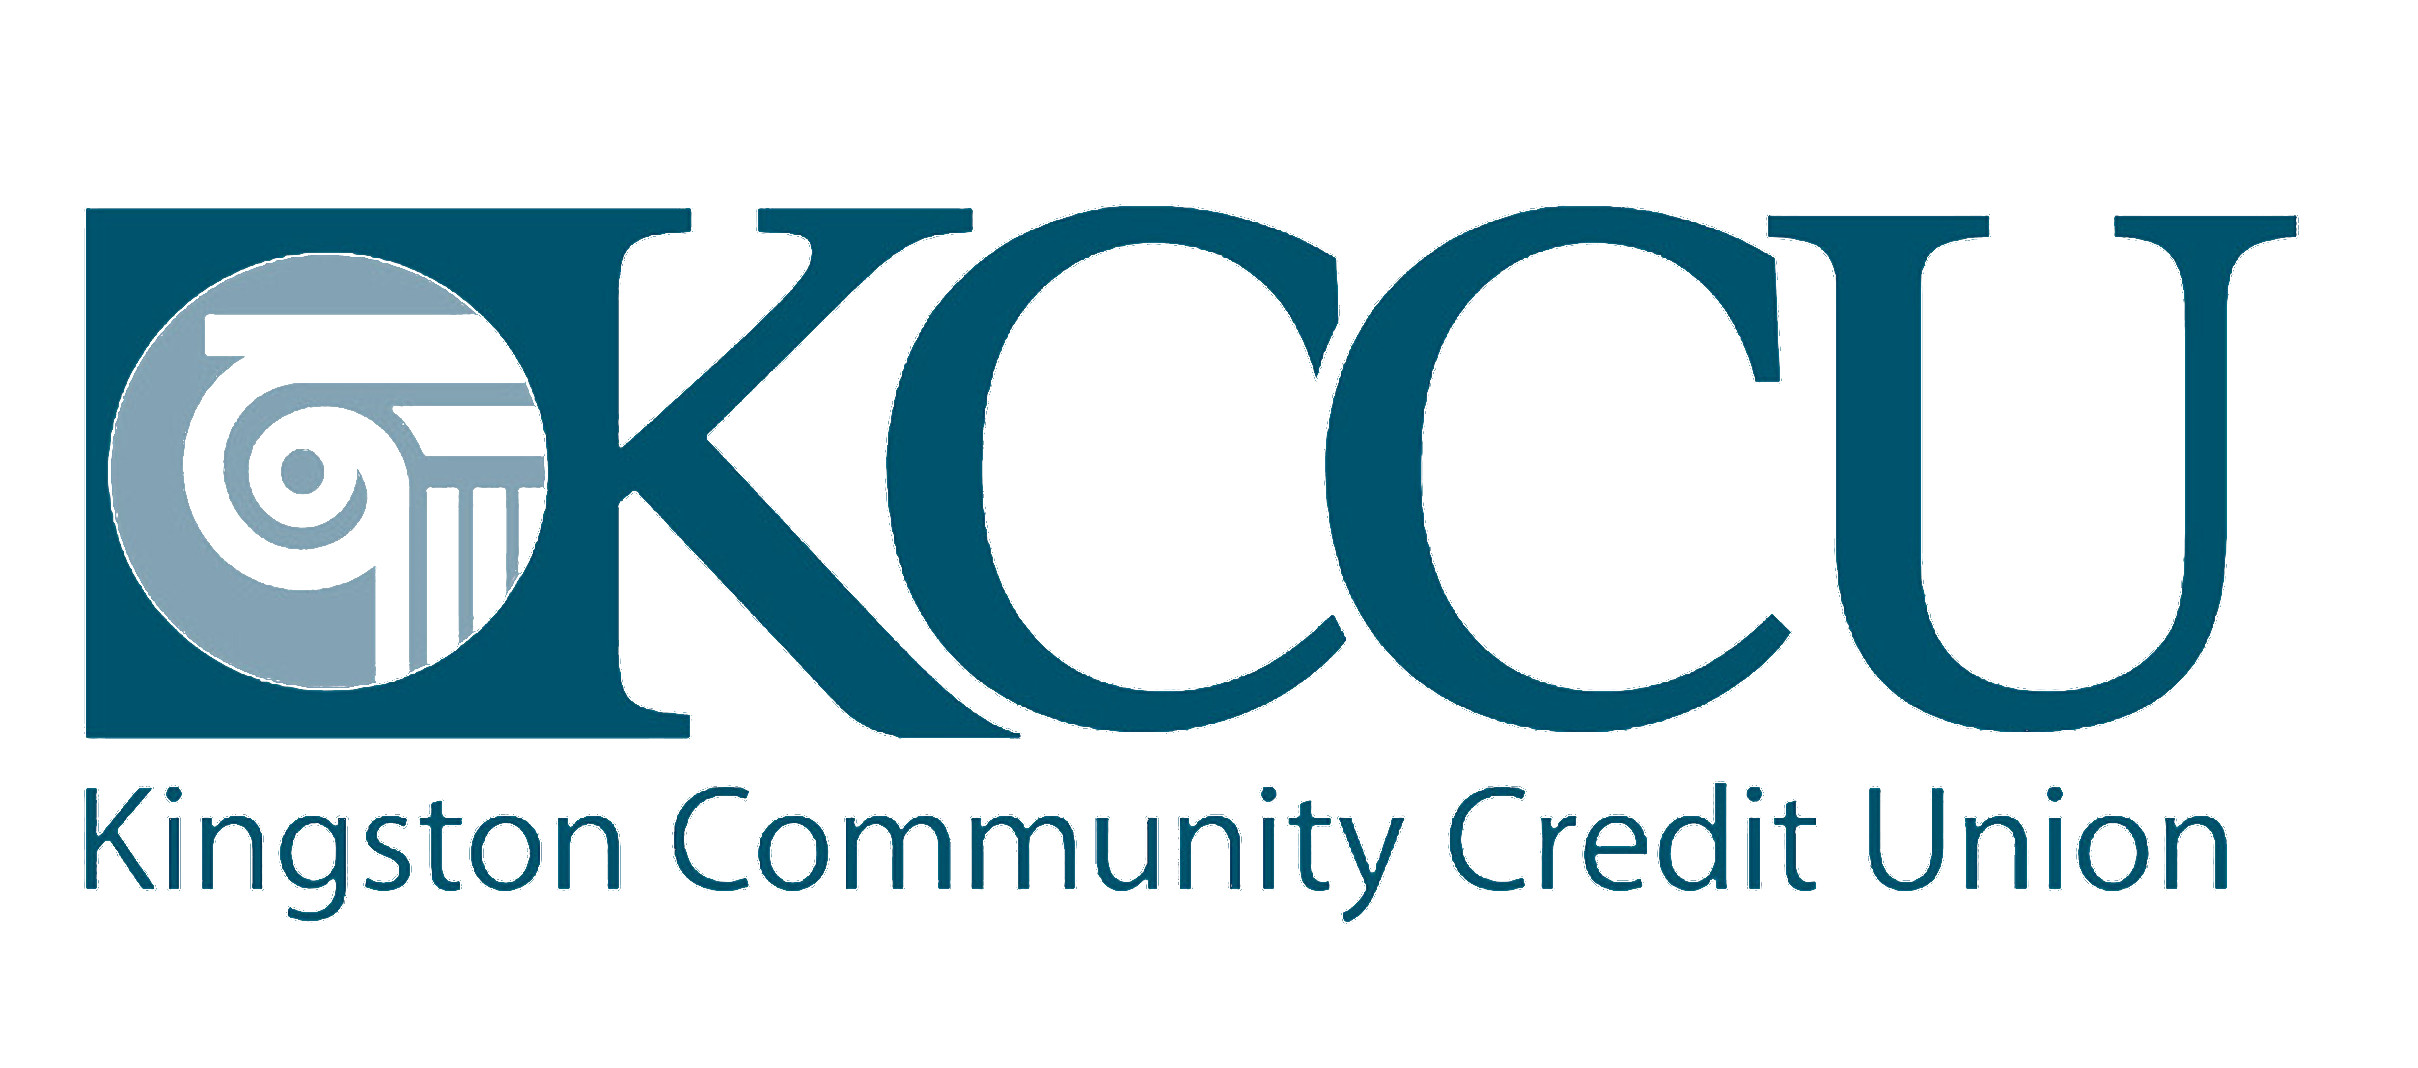 Kingston Community Credit Union